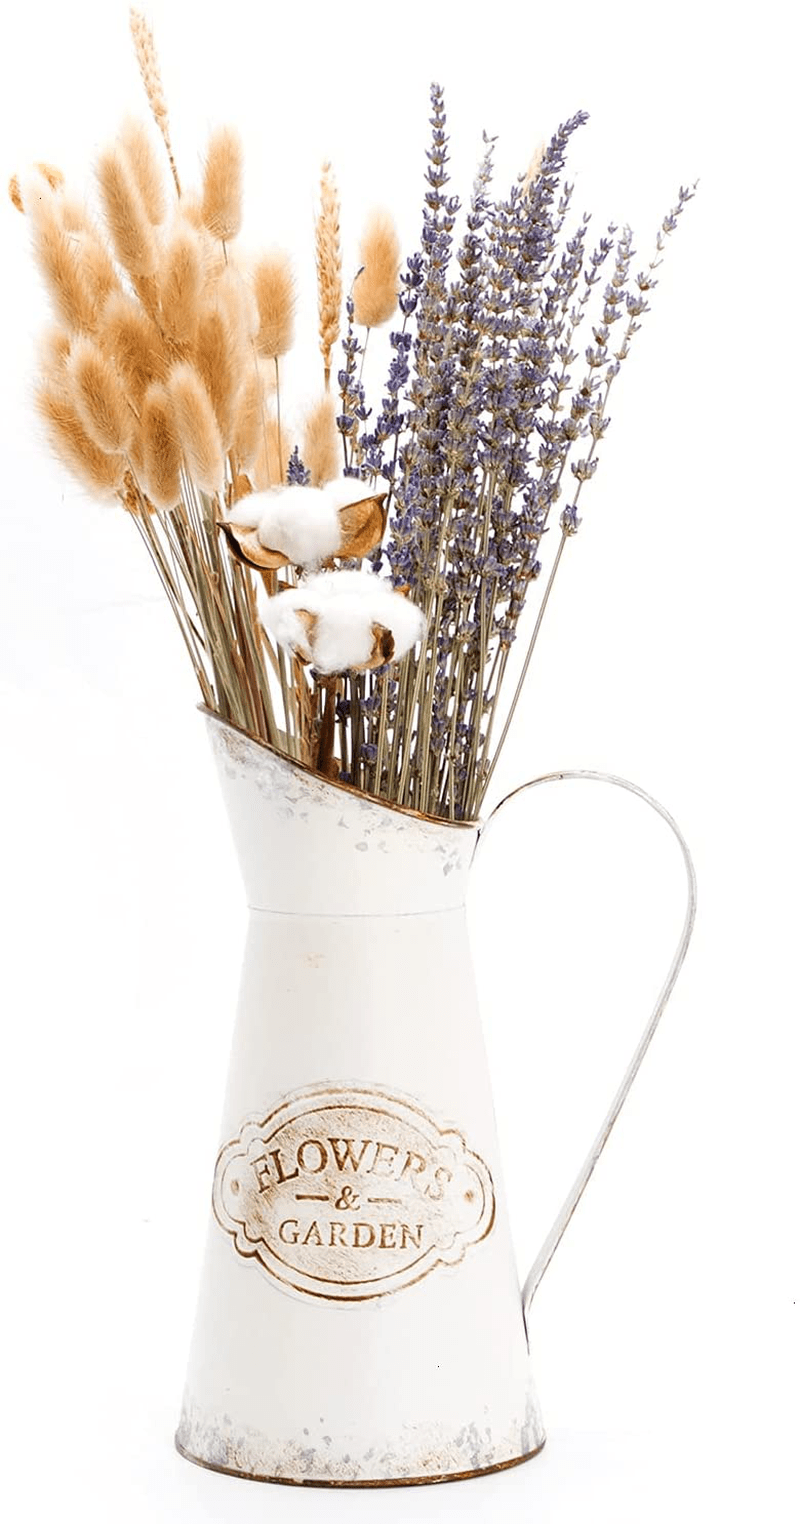 YoleShy Farmhouse Decorative Pitcher, Metal Rustic Pitcher Vase Flower Jug for Home Decoration, Wedding Decor, Photo Props (White)